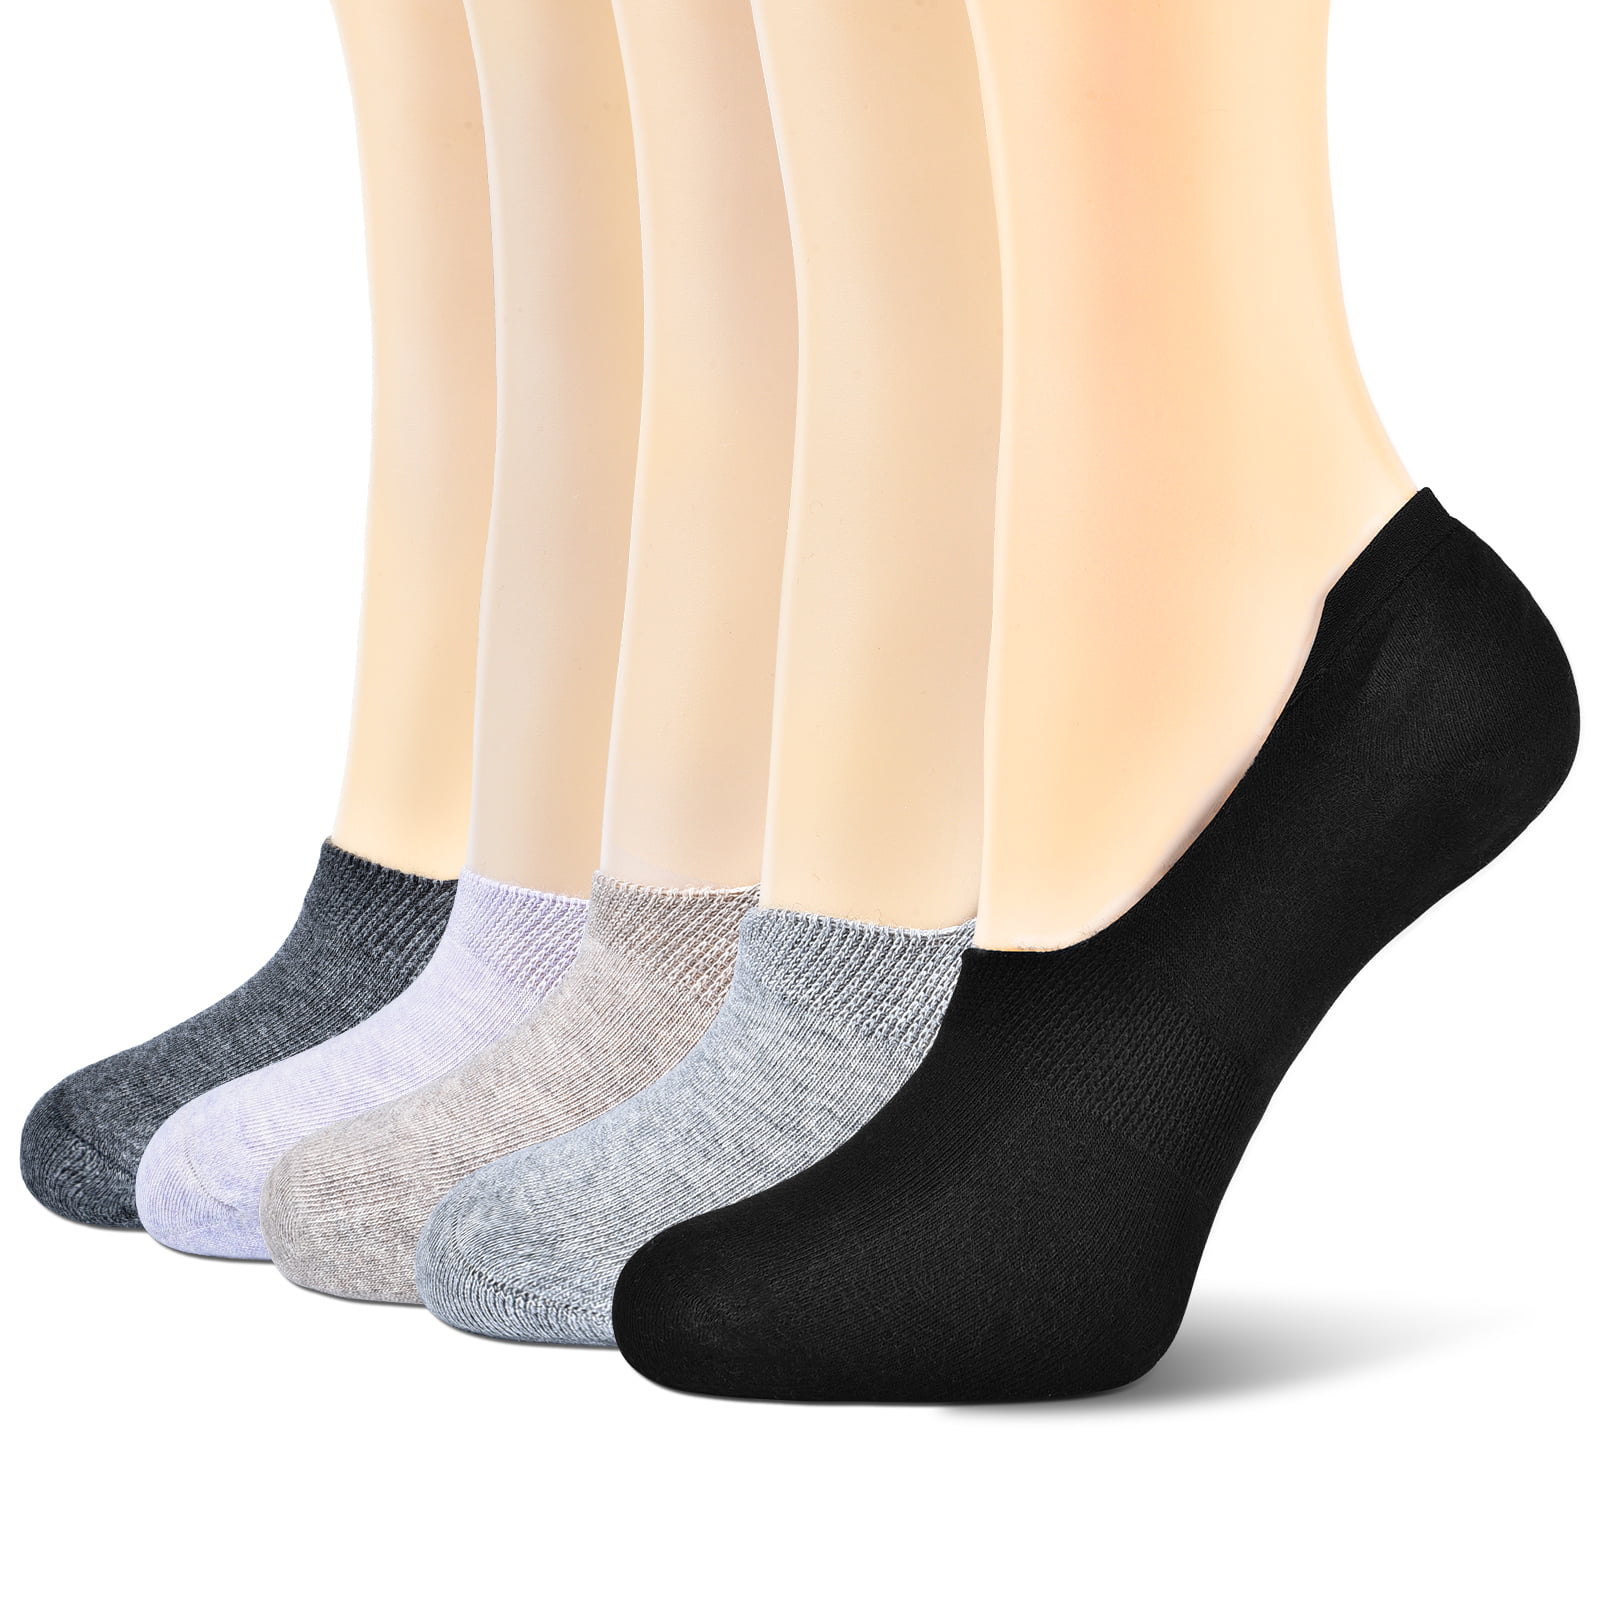 5 Pairs Womens Liner Socks No Show Boat Socks Cotton Blends Low Cut Socks Lots